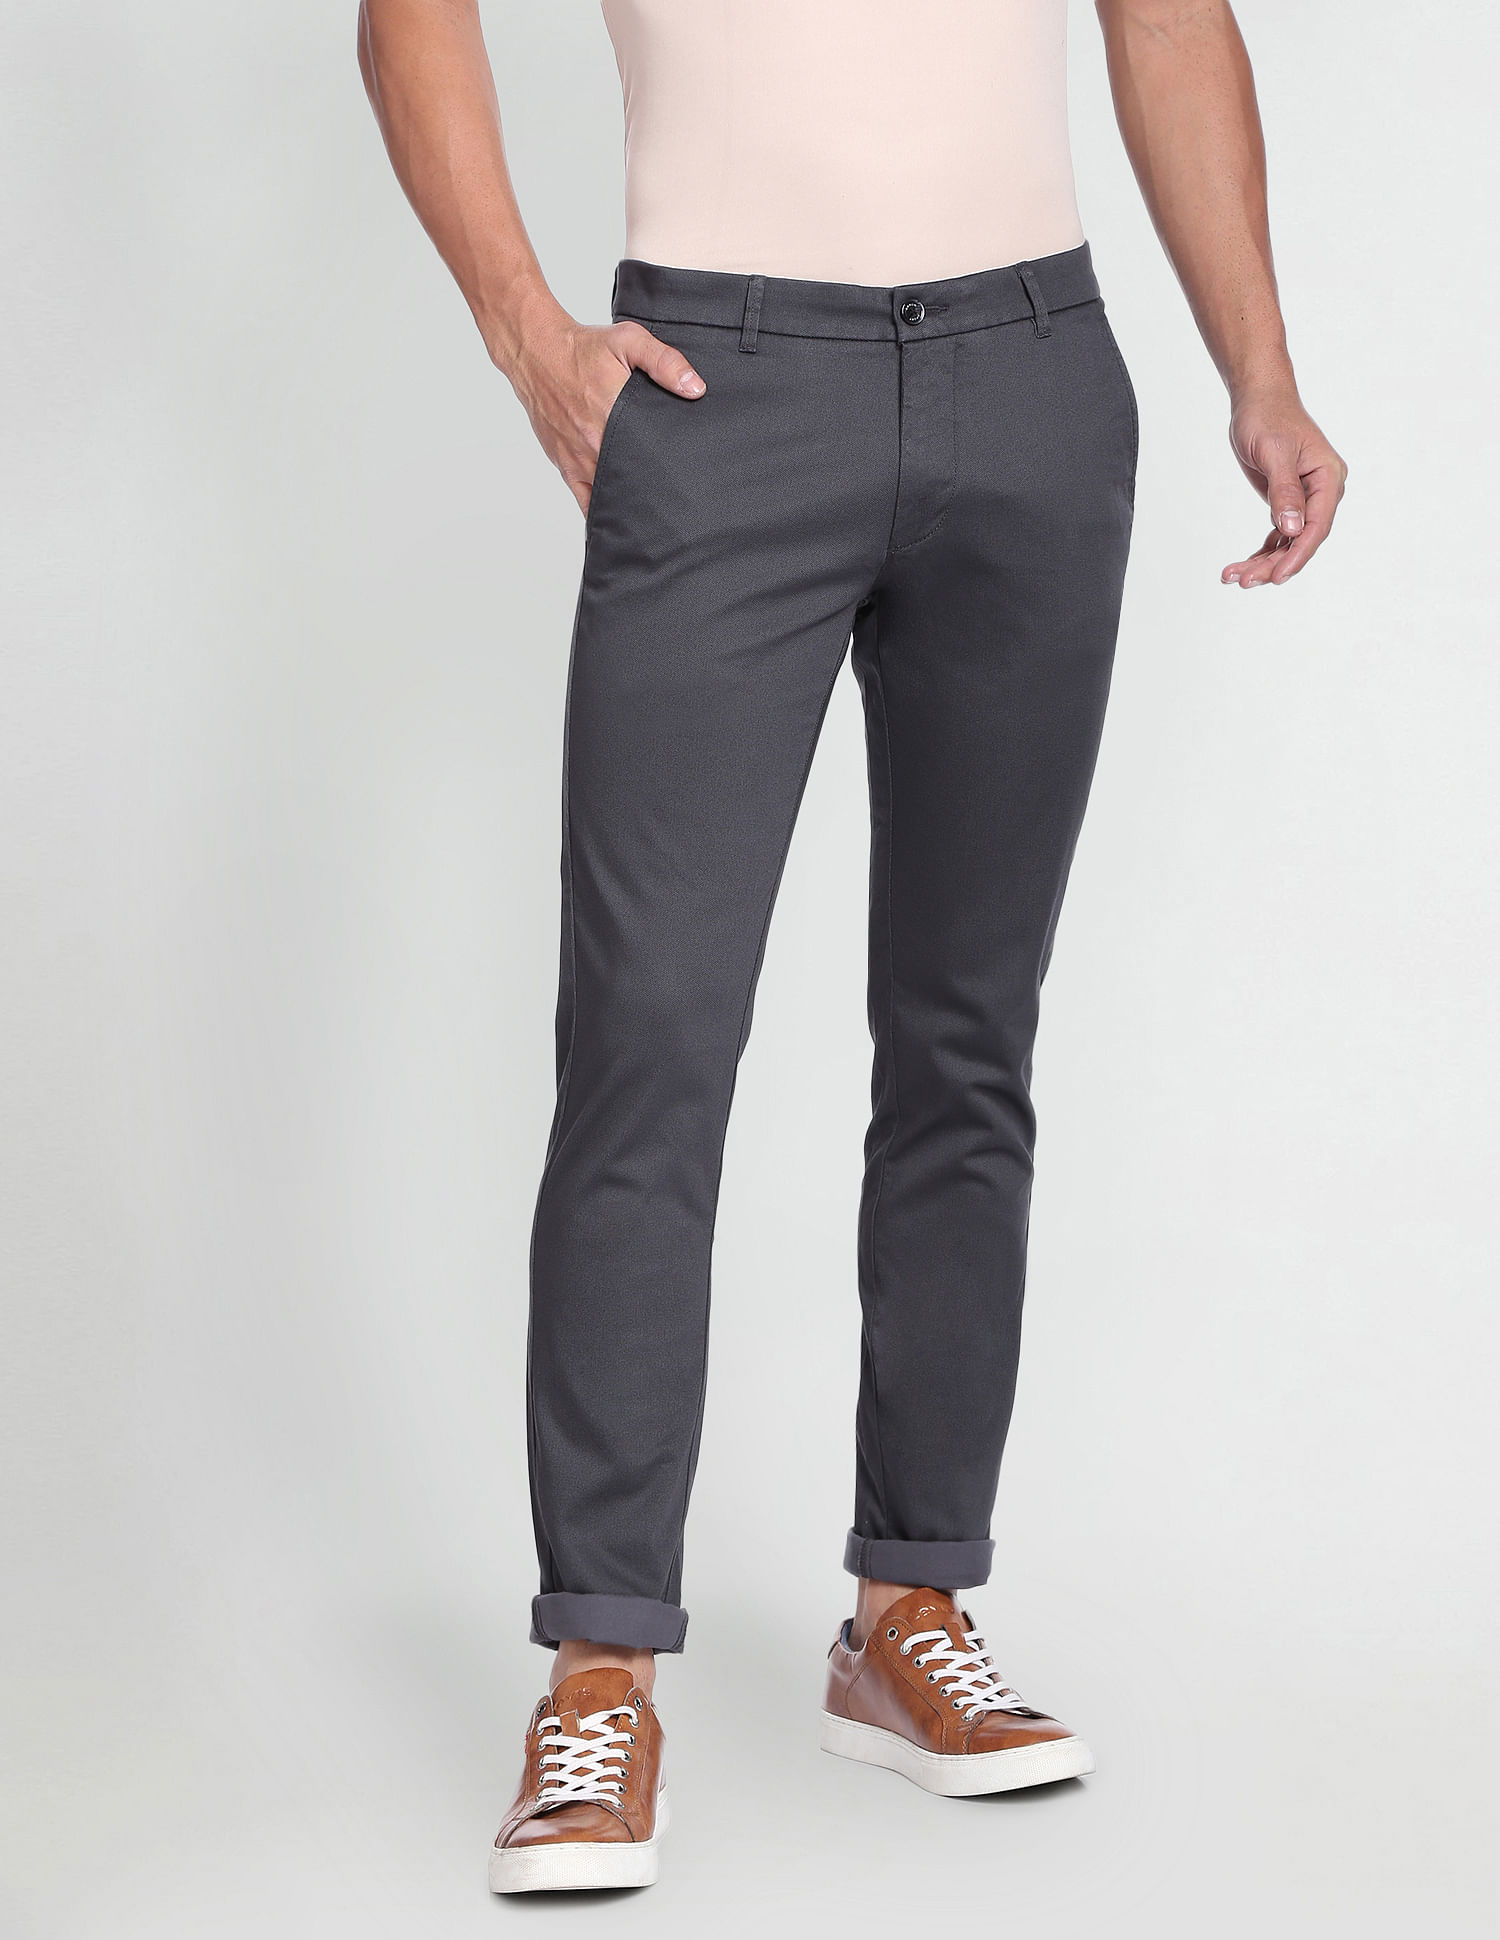 Buy Black Trousers  Pants for Men by AJIO Online  Ajiocom